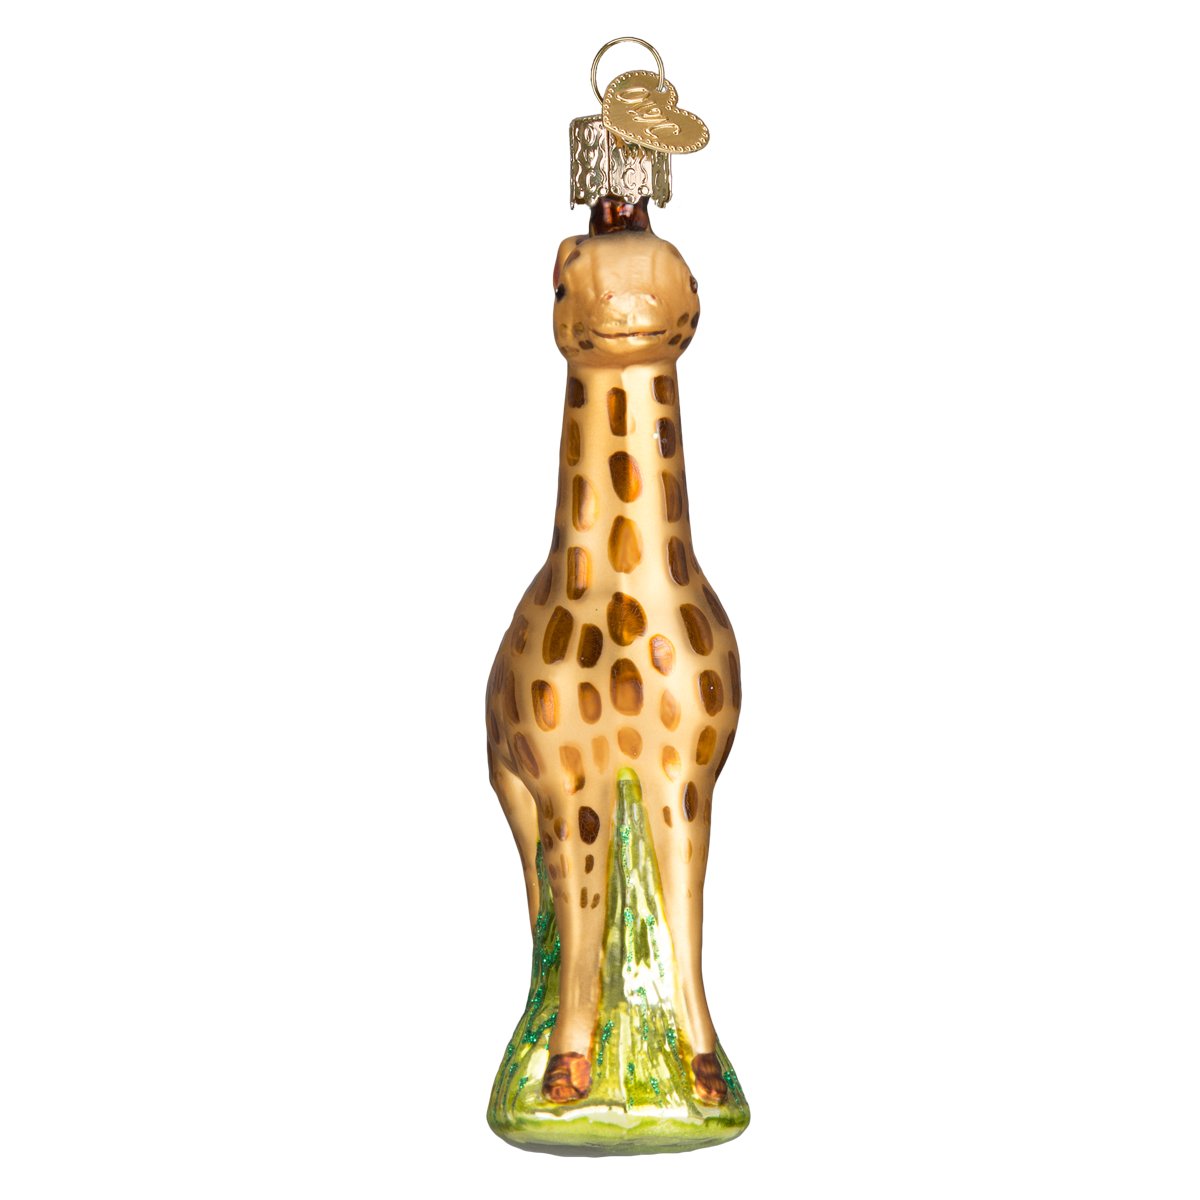 Old World Christmas - Baby Giraffe Ornament    